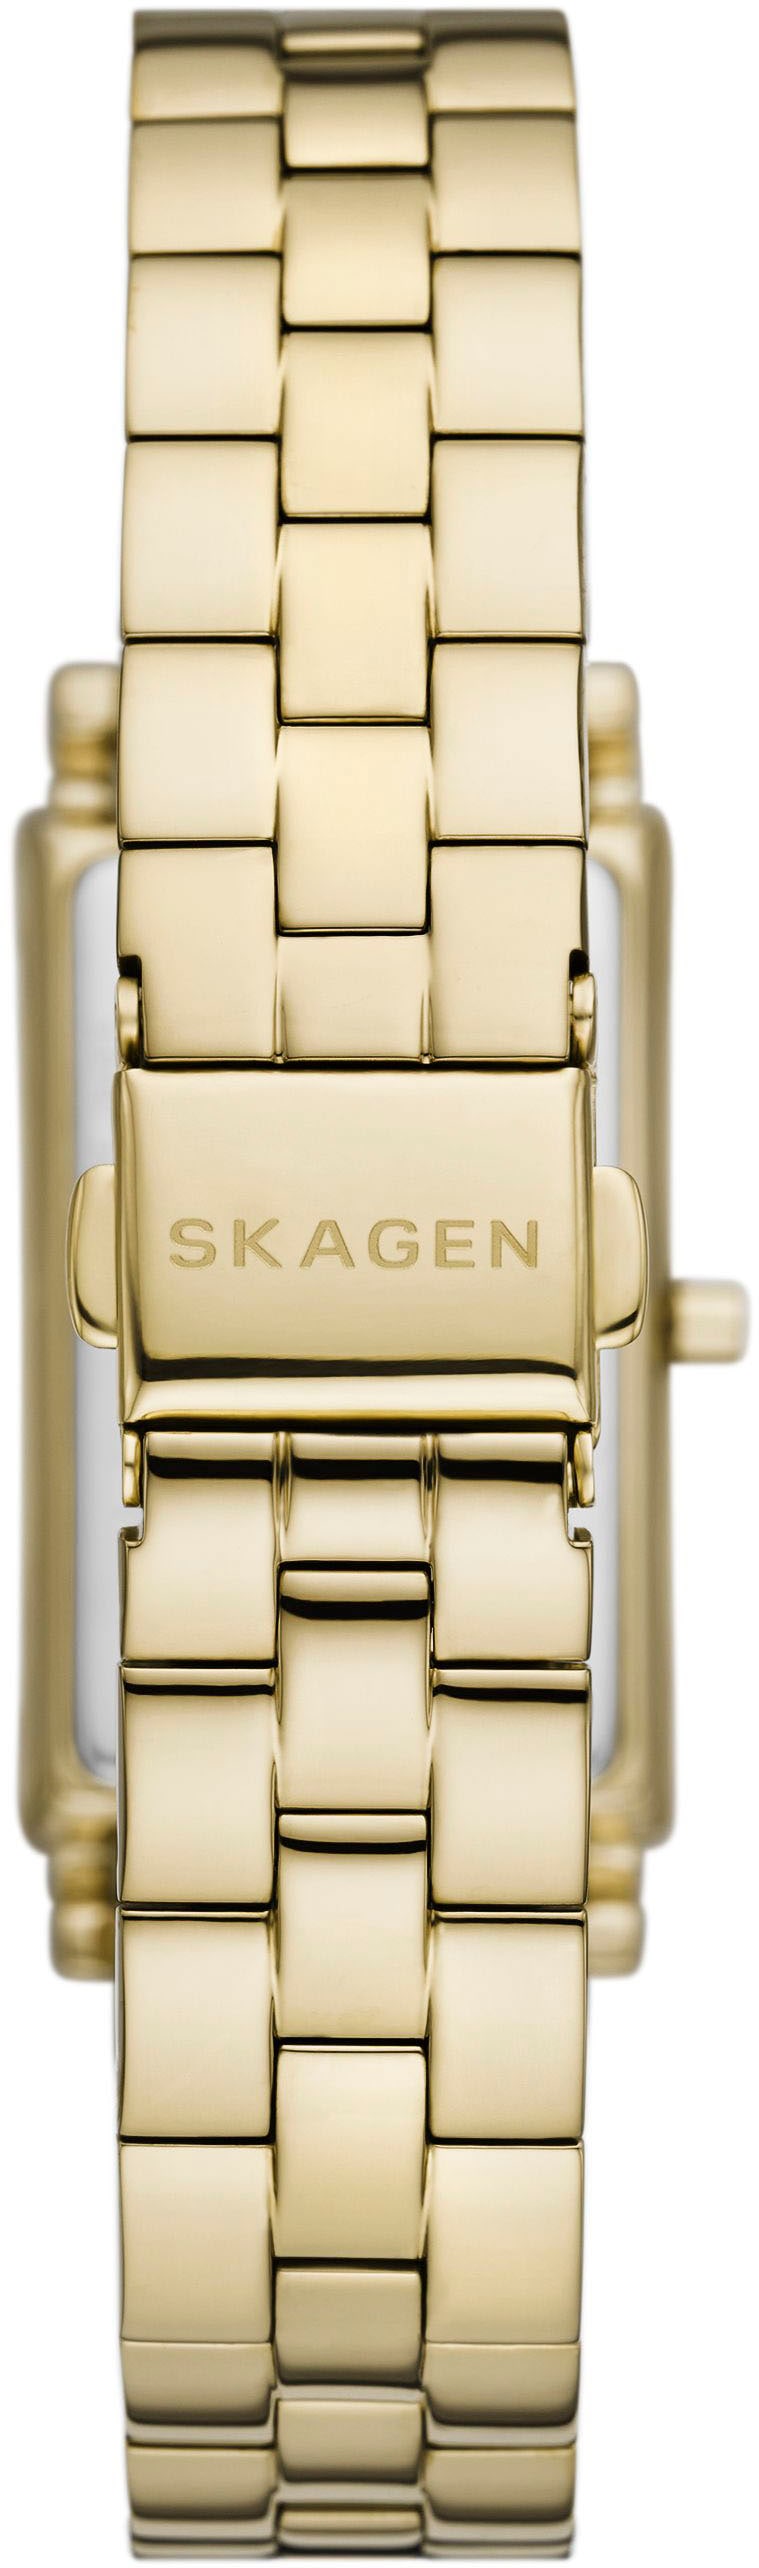 Skagen Quarzuhr »HAGEN, SKW3098«